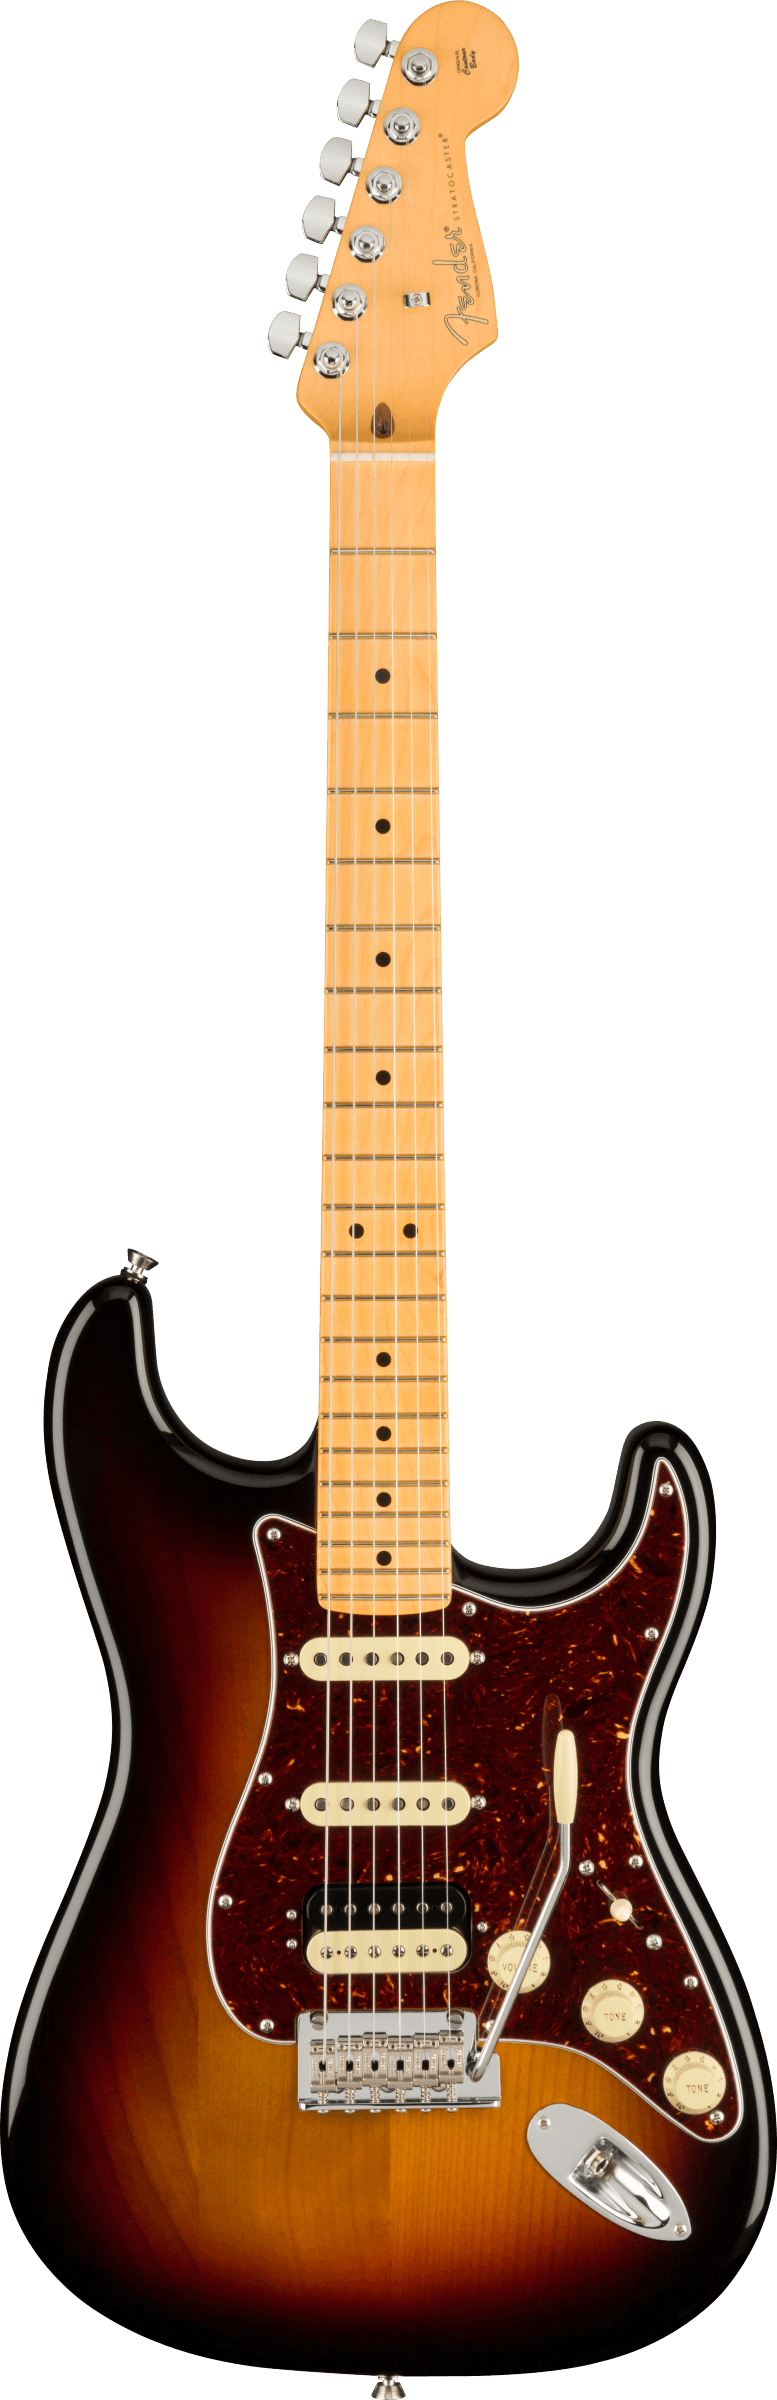 Fender Stratocaster electric guitar in 3 Color Sunburst Tone Shop Guitars Dallas